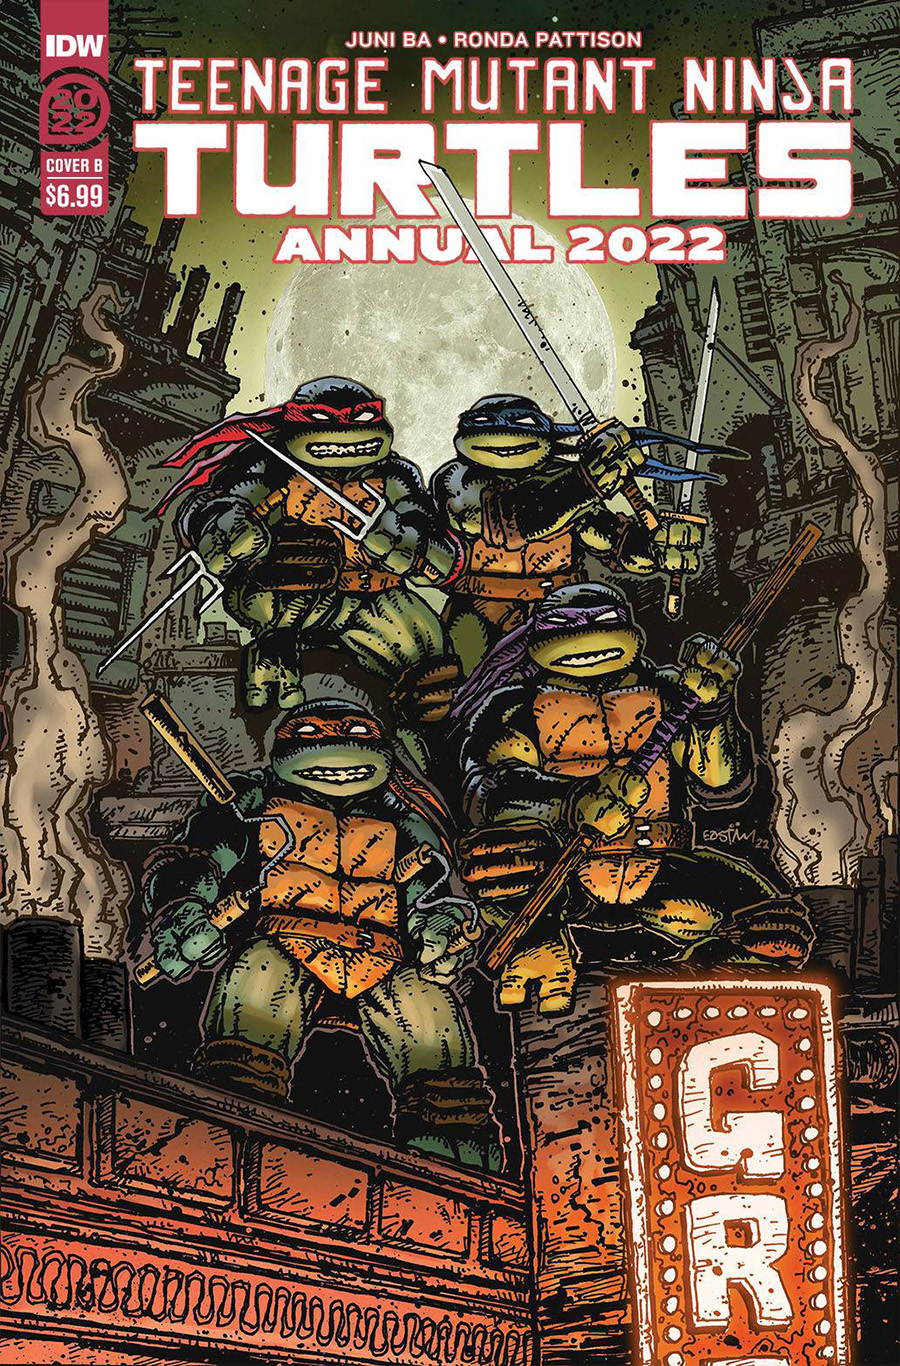 Teenage Mutant Ninja Turtles Vol 5 Annual 2022 #1 (One Shot) Cover B Variant Kevin Eastman Cover